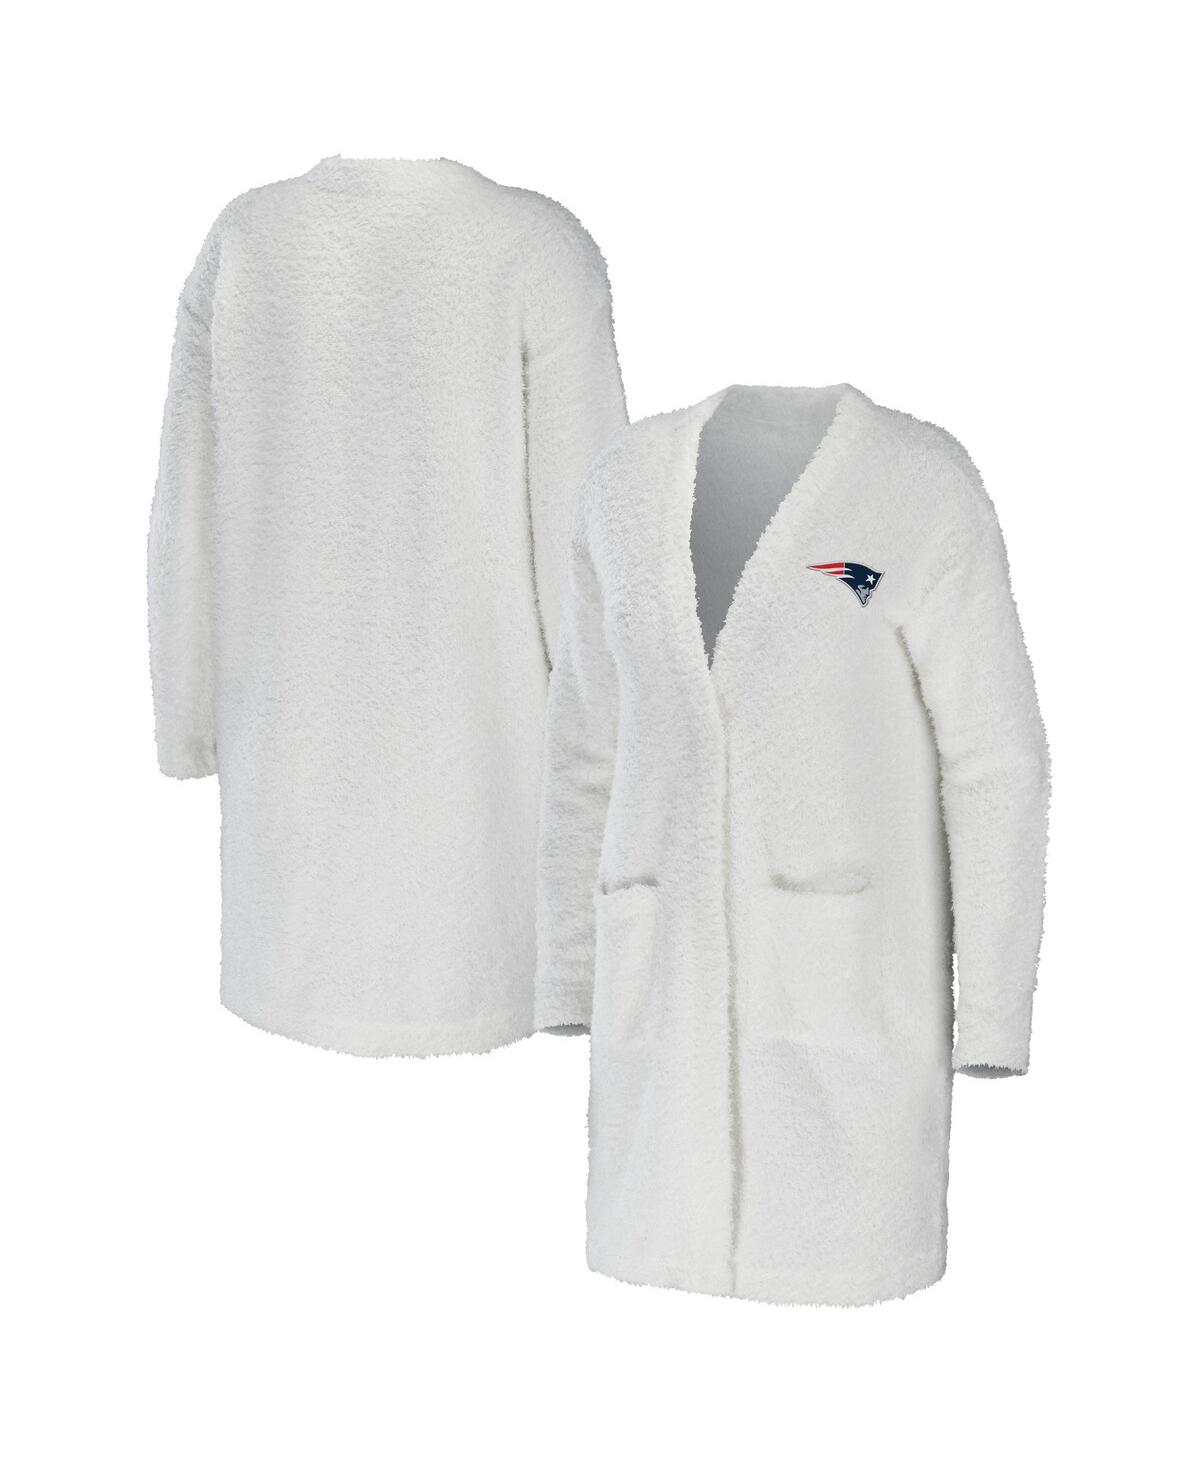 Wear By Erin Andrews Women's  Cream New England Patriots Cozy Lounge Cardigan Sweater